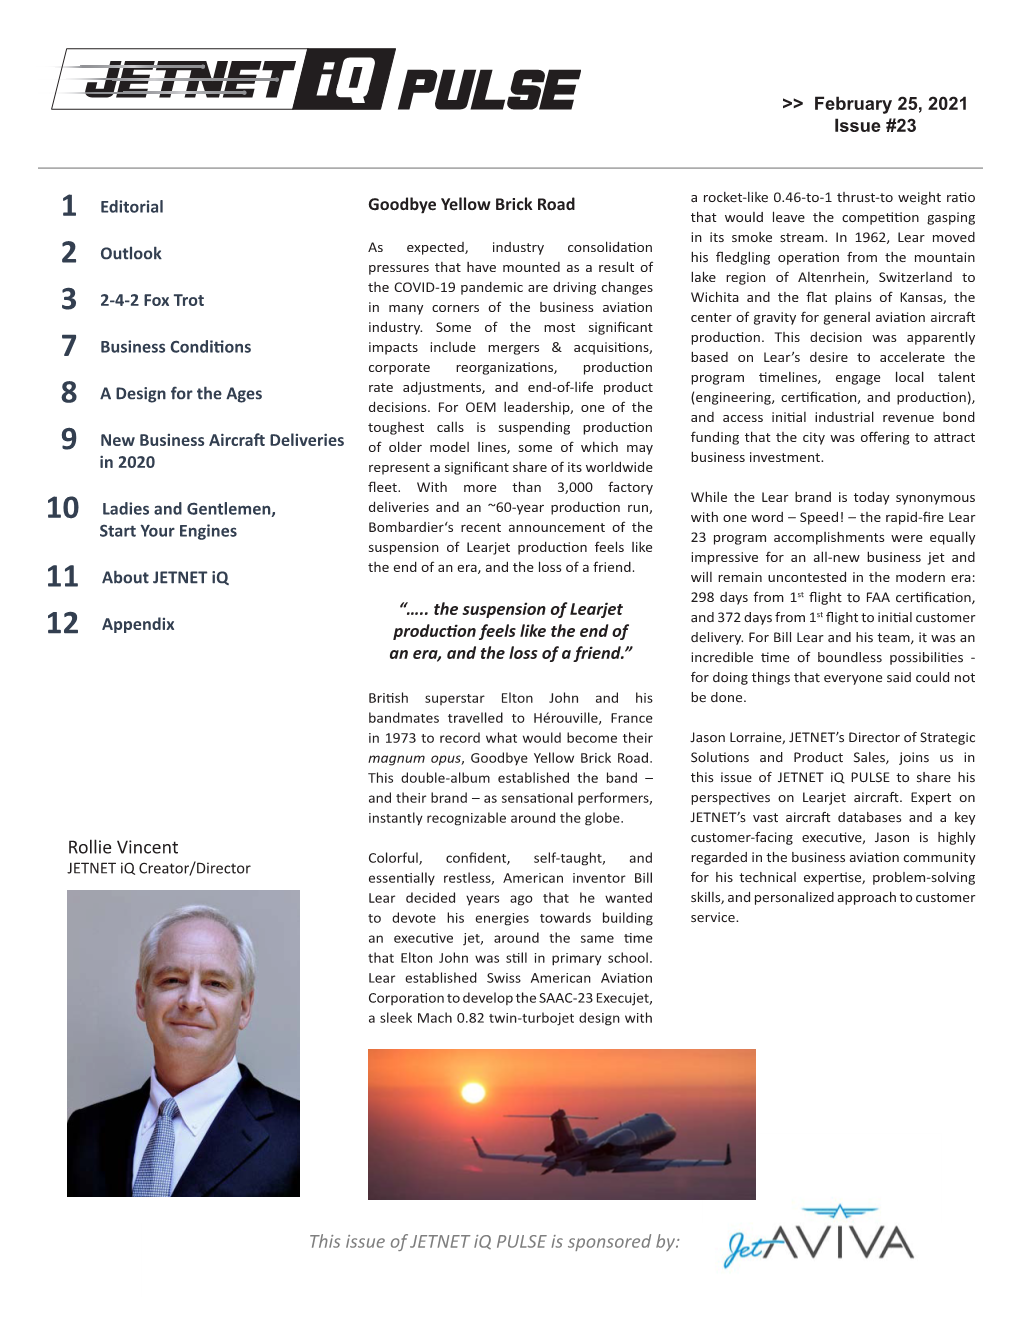 BUSINESS AVIATION MARKET INTELLIGENCE 1 >> February 25, 2021 Issue #23